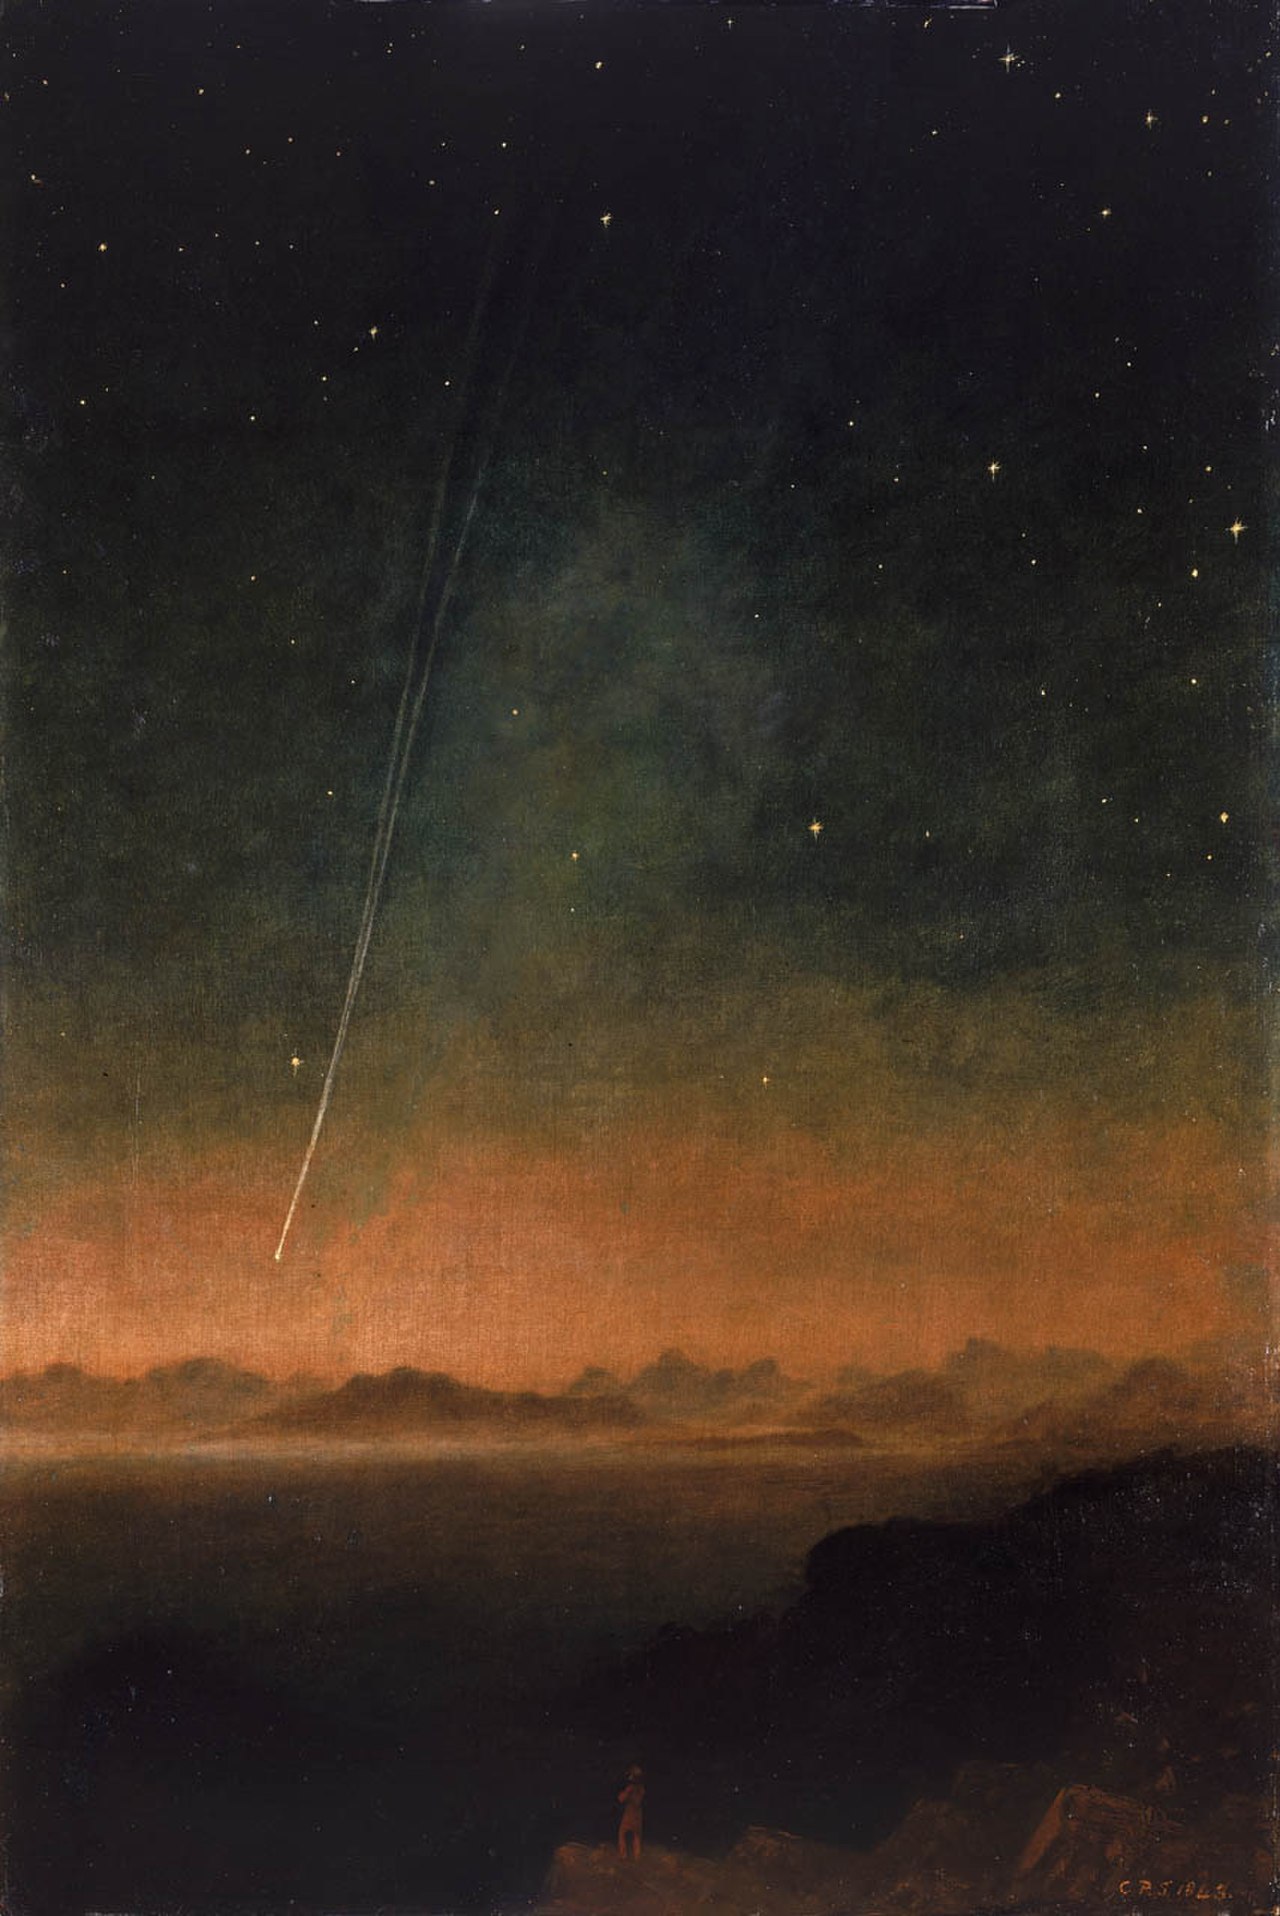 Большая мартовская комета 1843 года by Charles Piazzi Smyth - 1843 - 105.2 x 75.3 см 